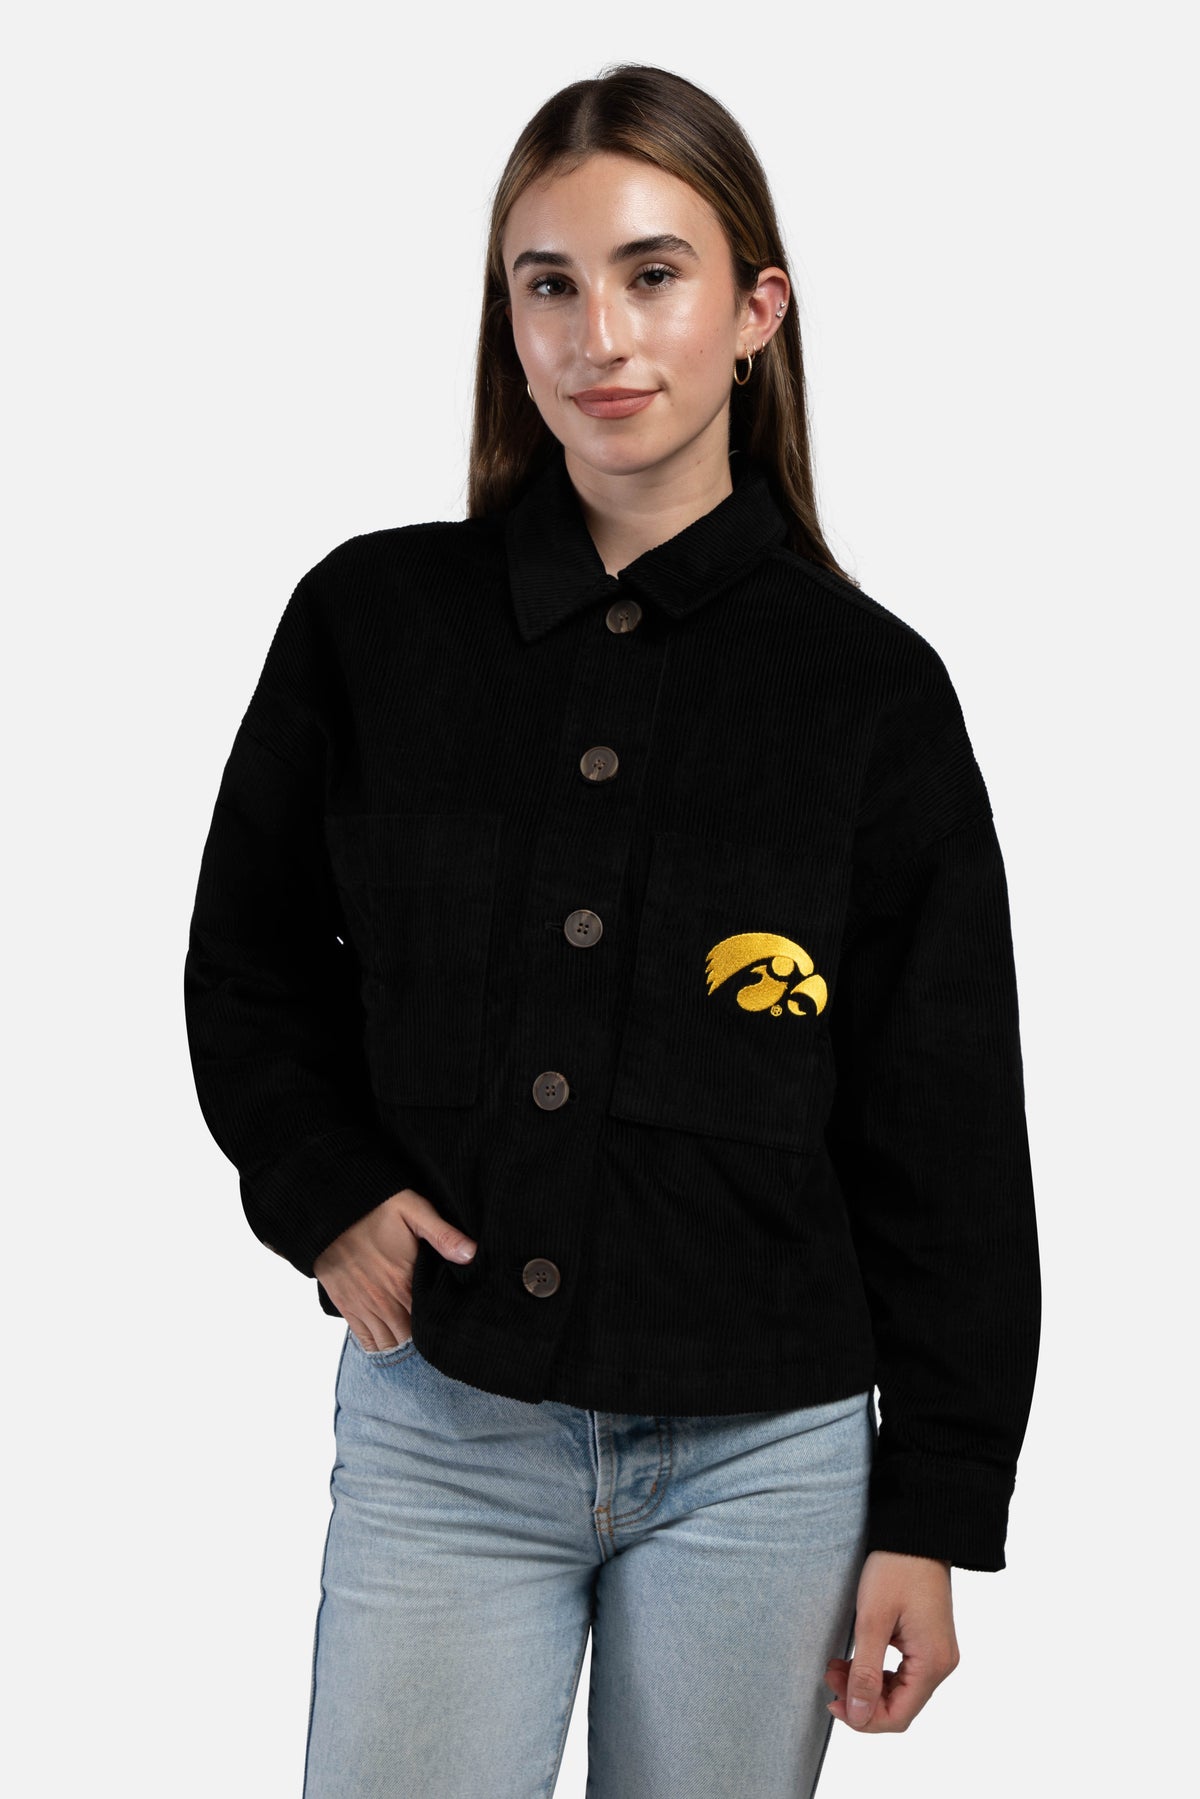 University of Iowa Corded Jacket